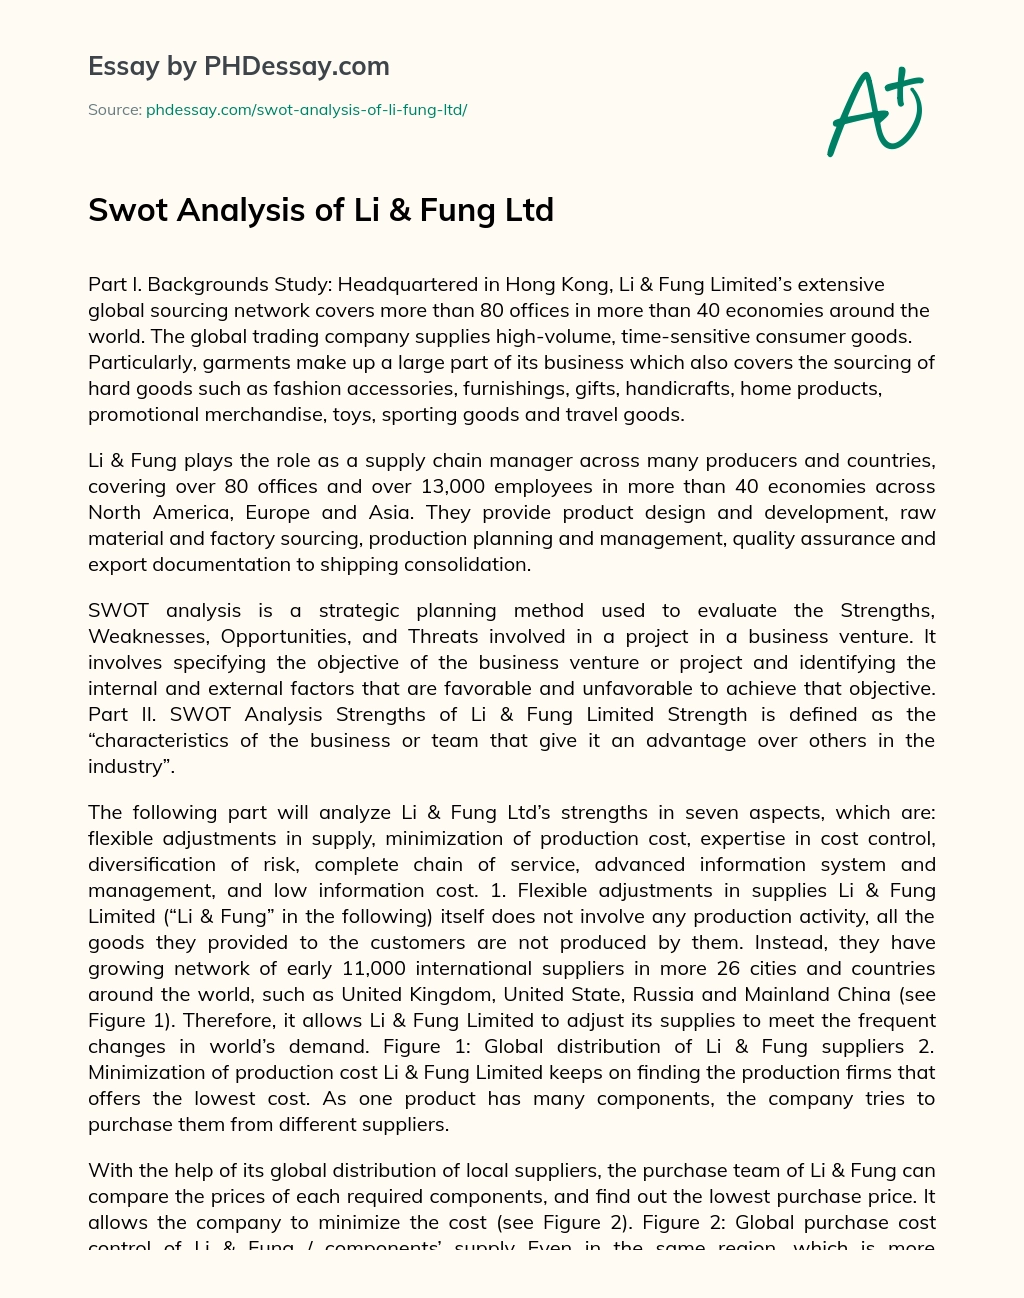 Swot Analysis of Li & Fung Ltd essay